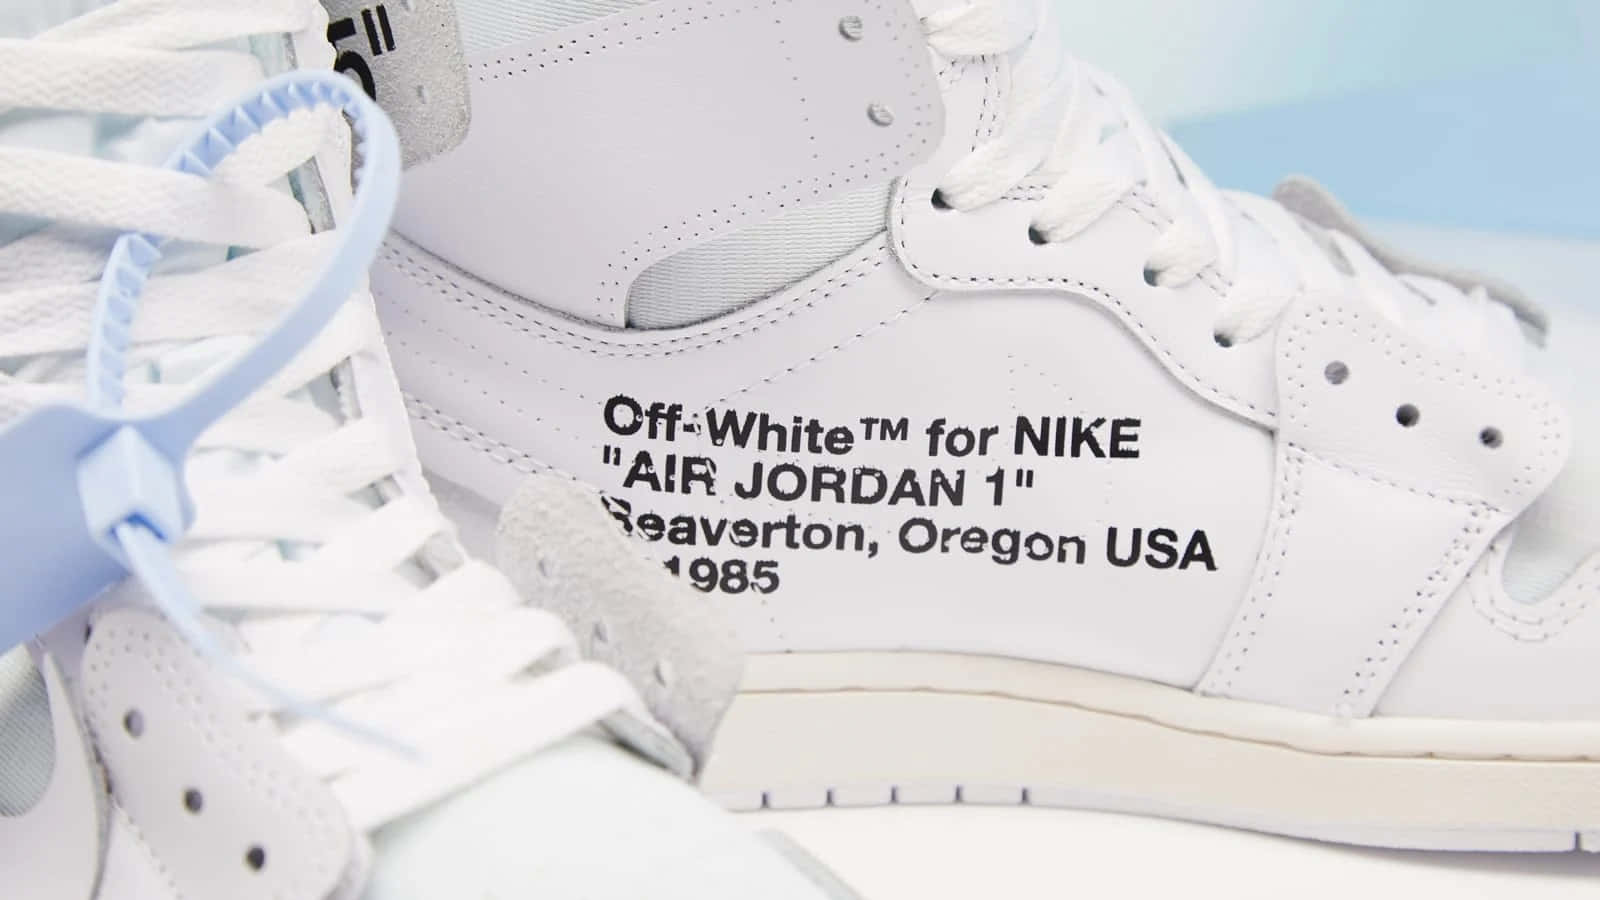 Offwhite Jordan 1 Oregon Usa Would Be Translated To 